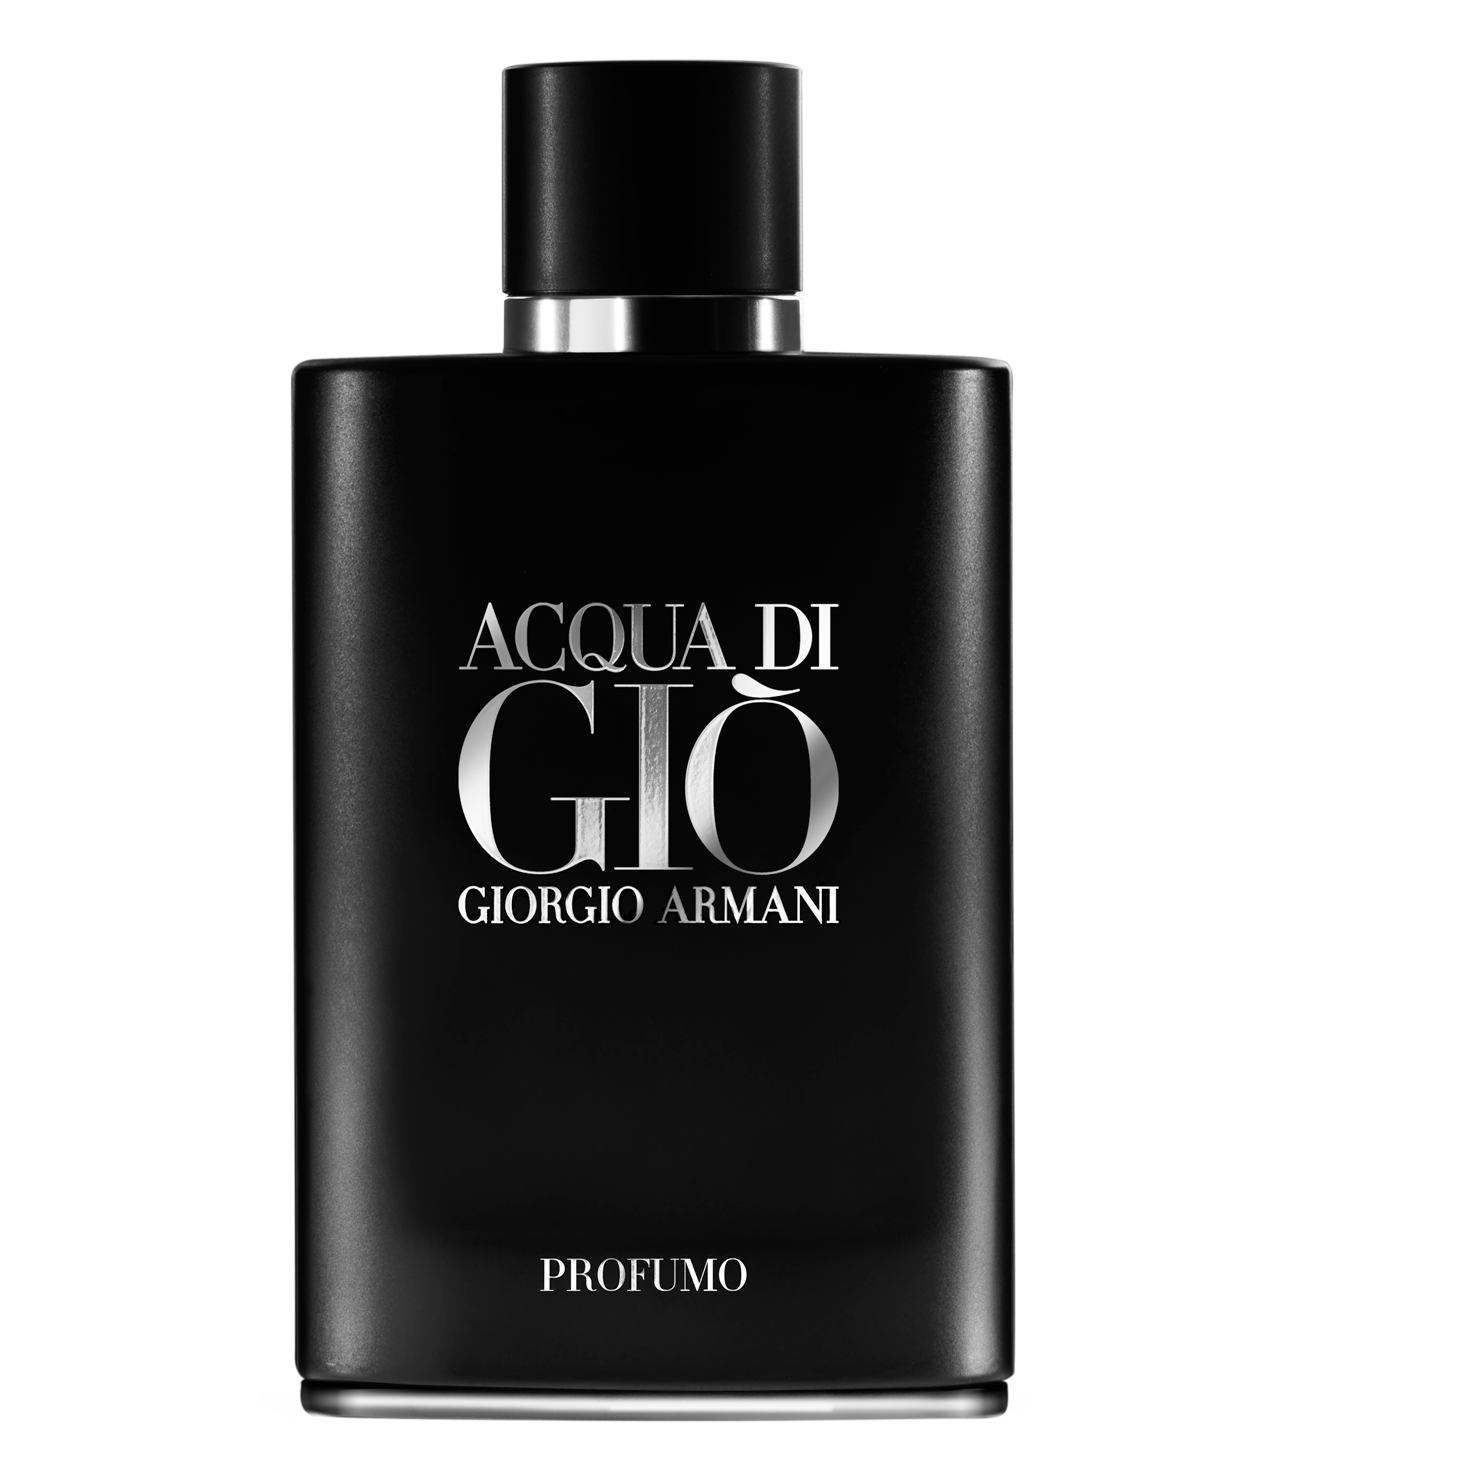 Tres versiones de Acqua di Gio para hombre de Giorgio Armani.